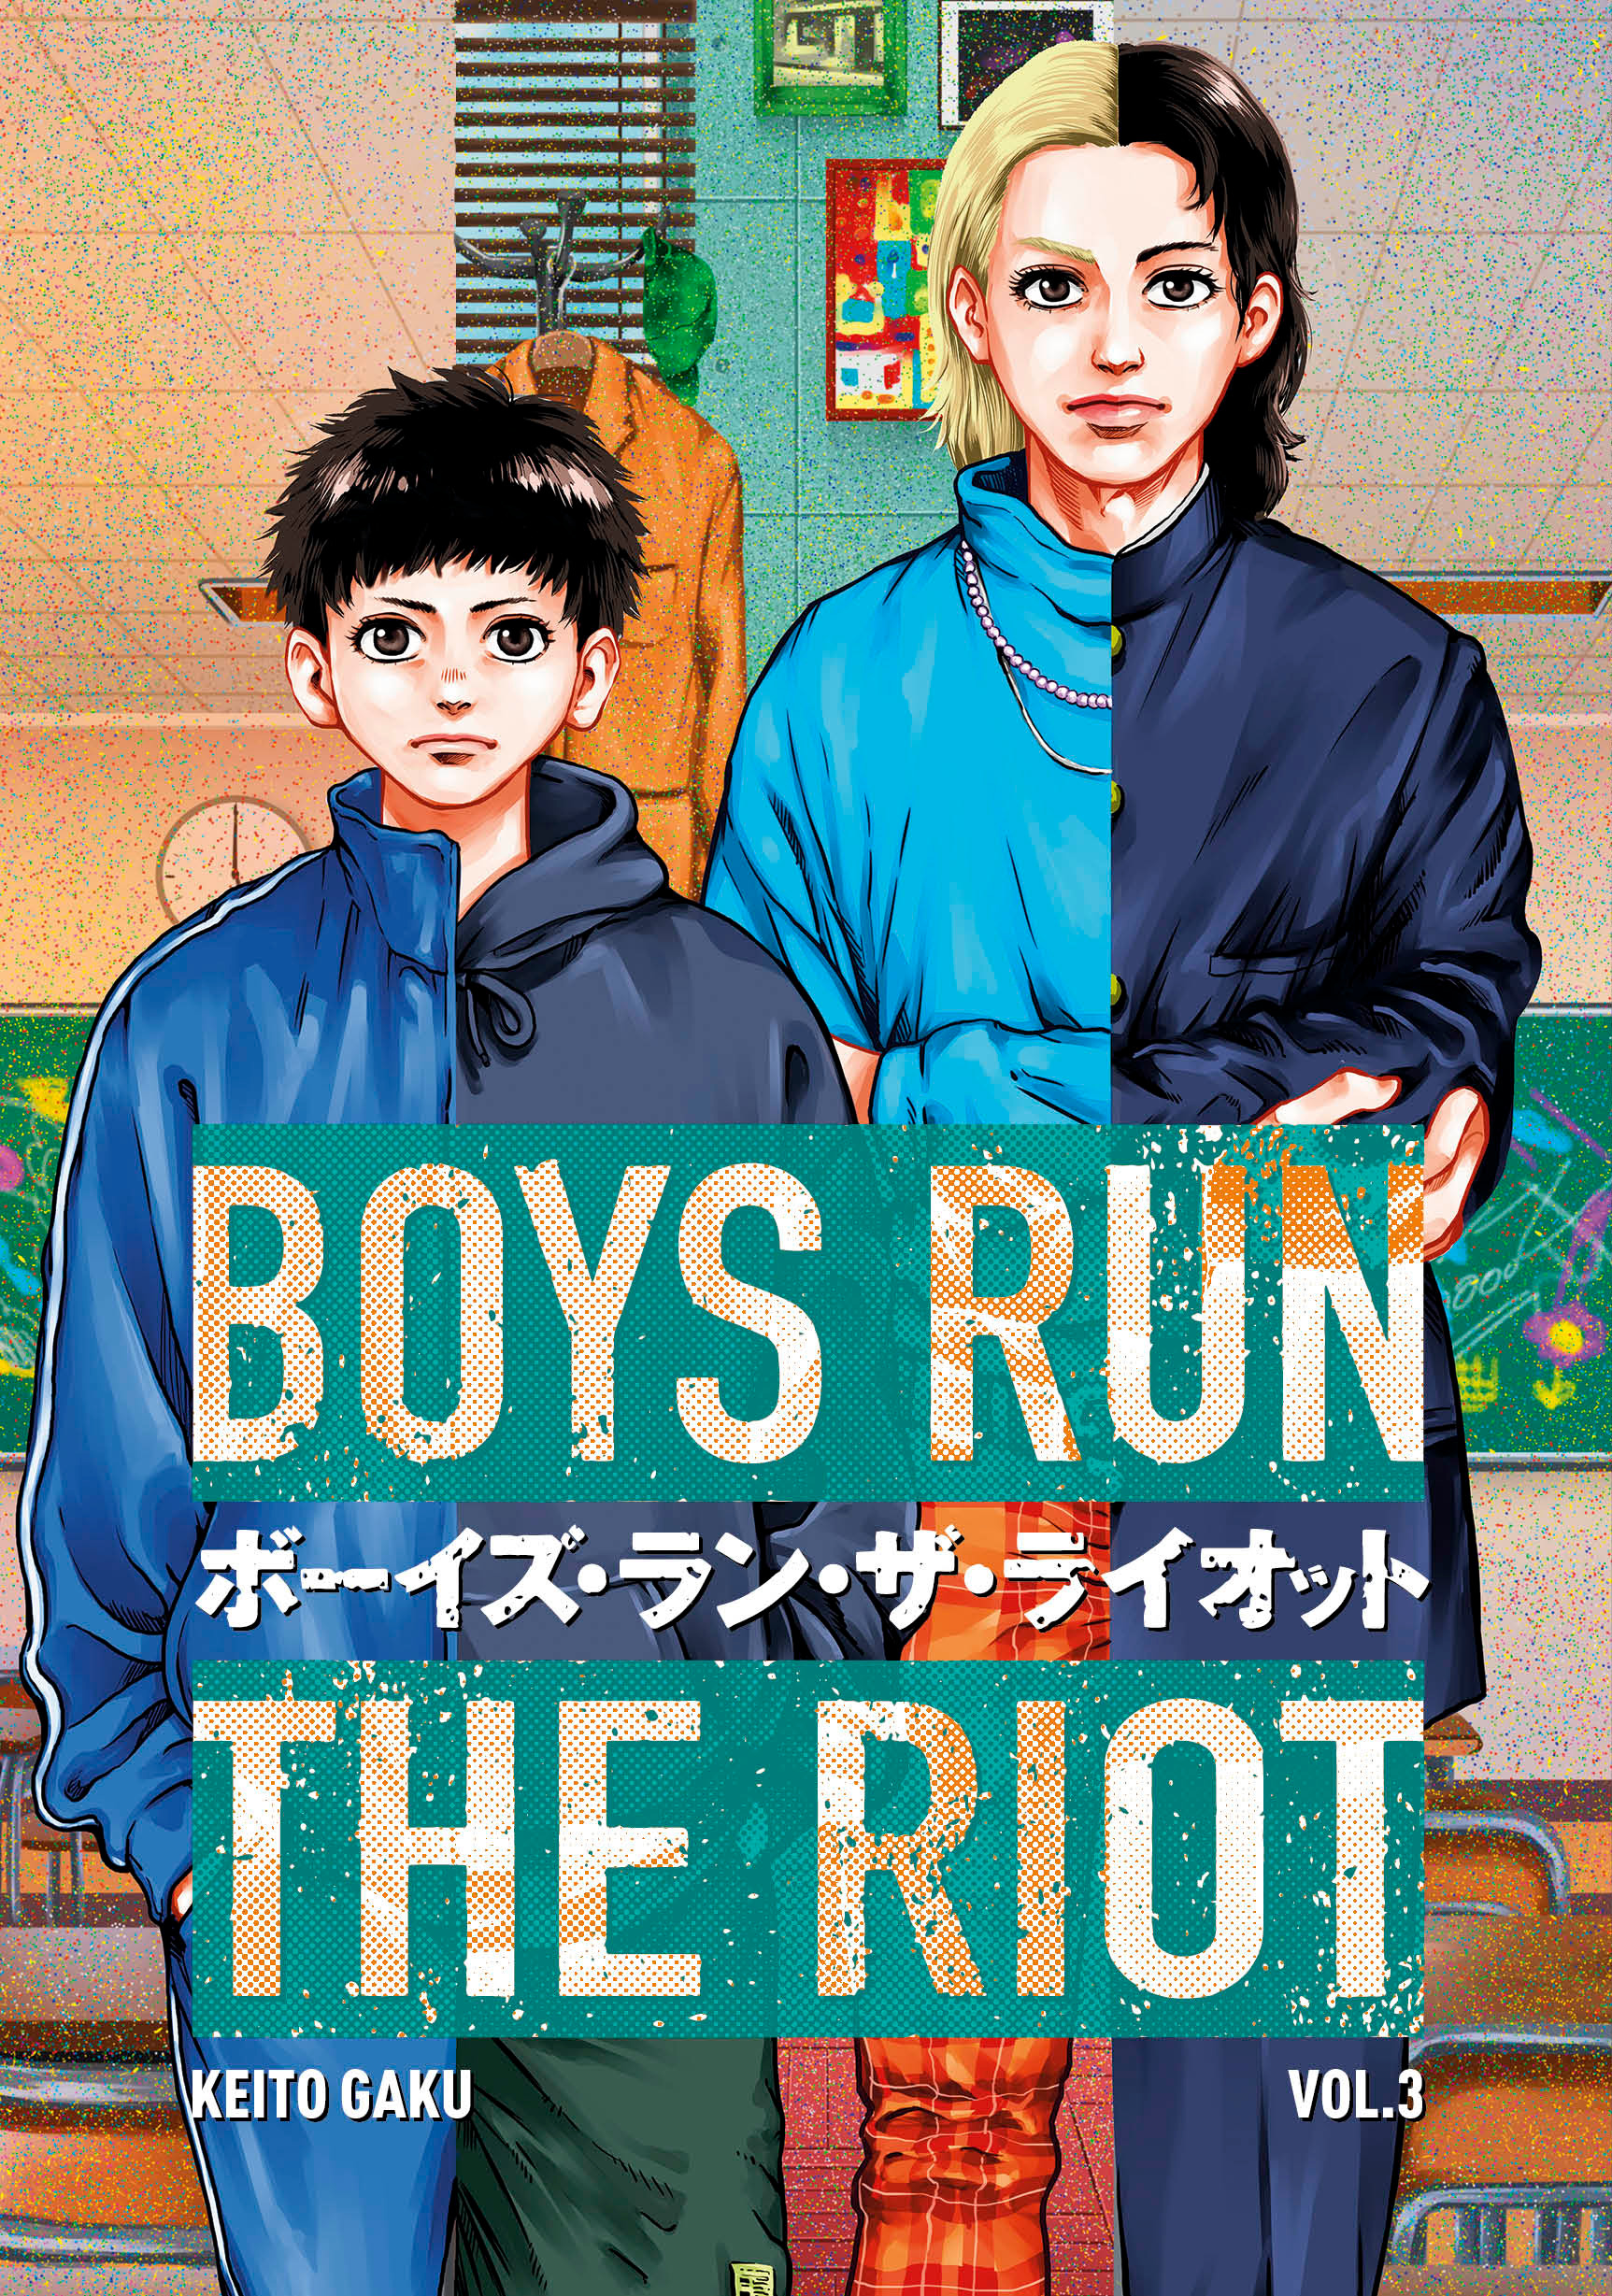 Boys Run the Riot Manga Volume 3 (Mature)